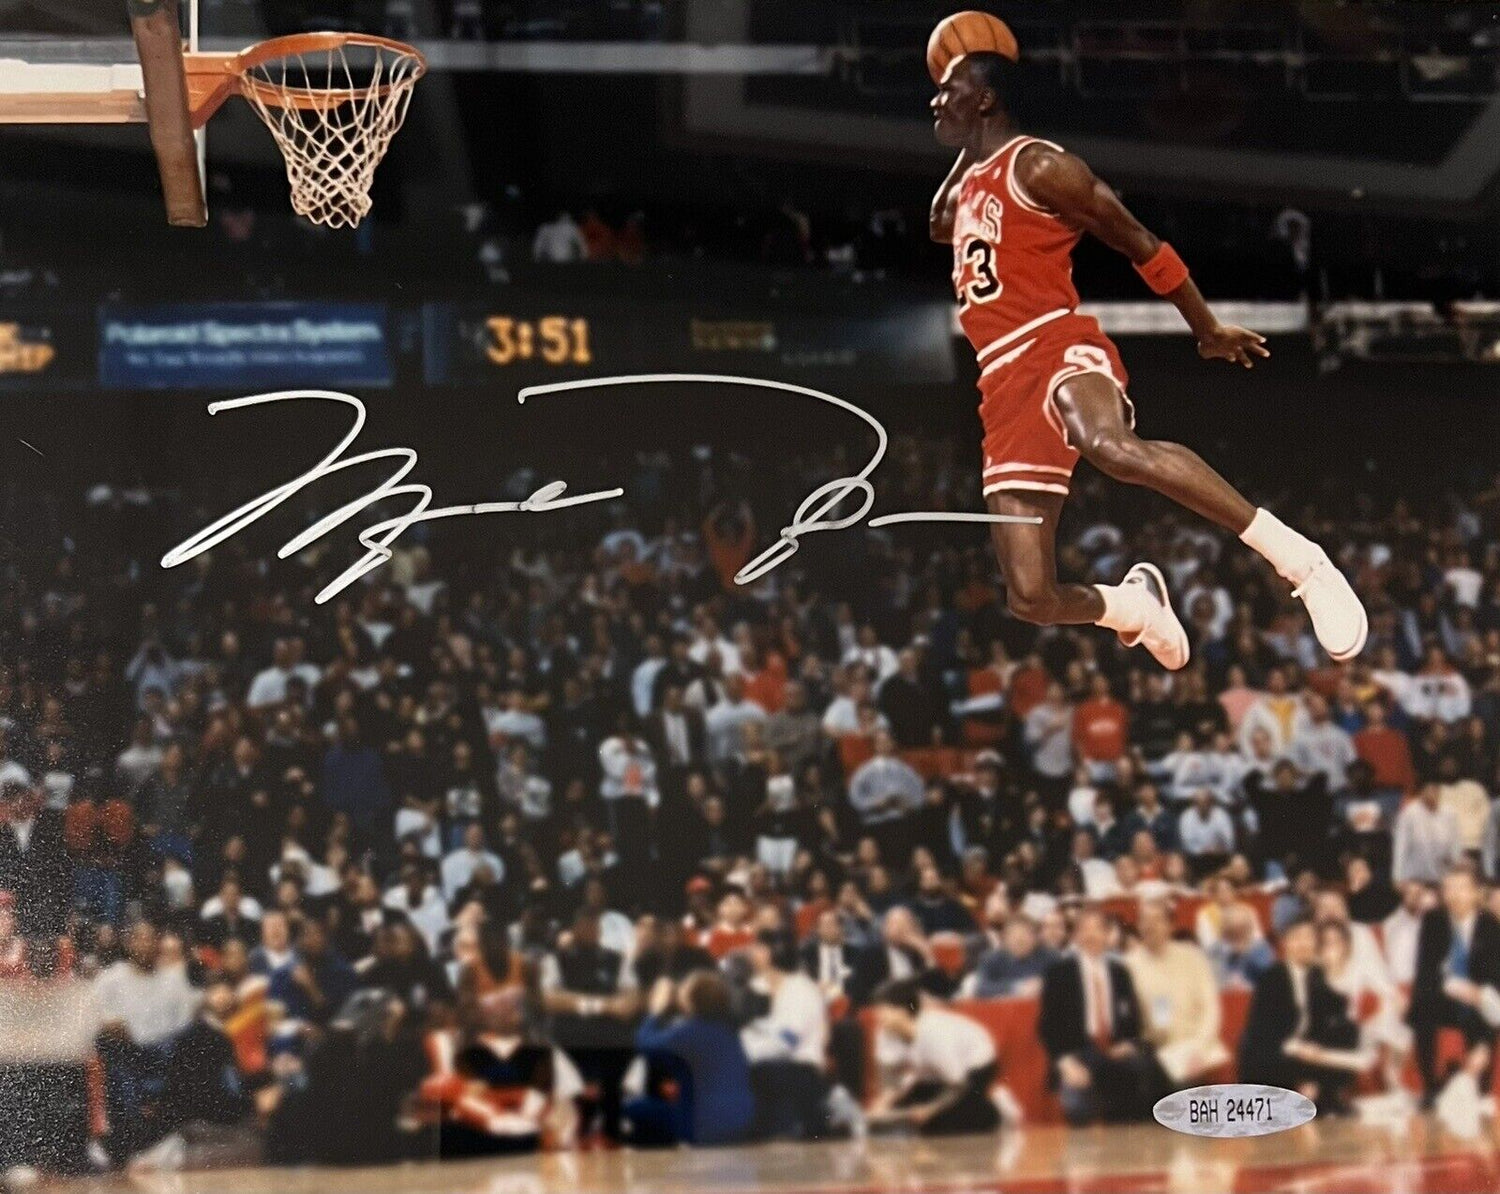 Michael Jordan 1985 Dunk Contest Gatorade Shot Signed 8x10 Photo. Upper Deck UDA